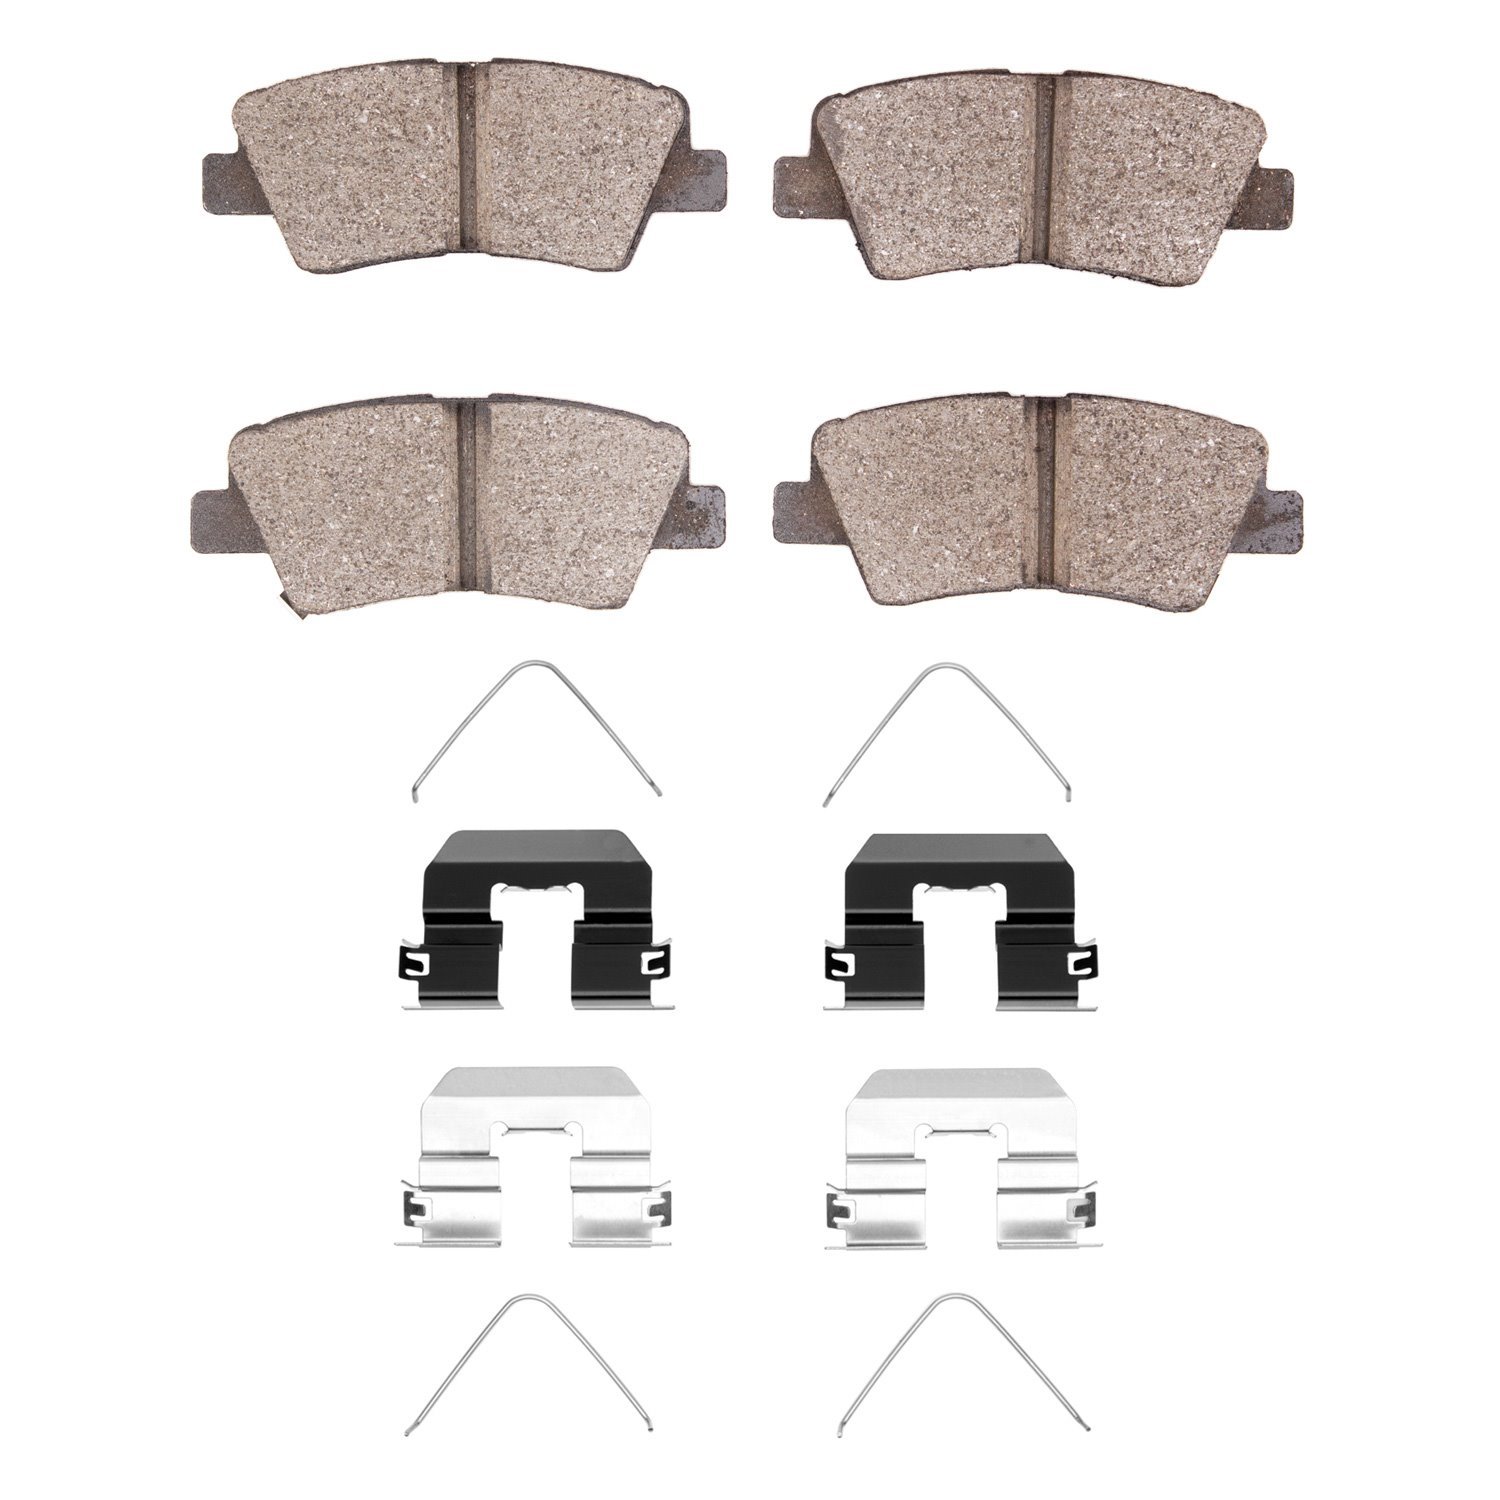 1310-2098-01 3000-Series Ceramic Brake Pads & Hardware Kit, Fits Select Kia/Hyundai/Genesis, Position: Rear